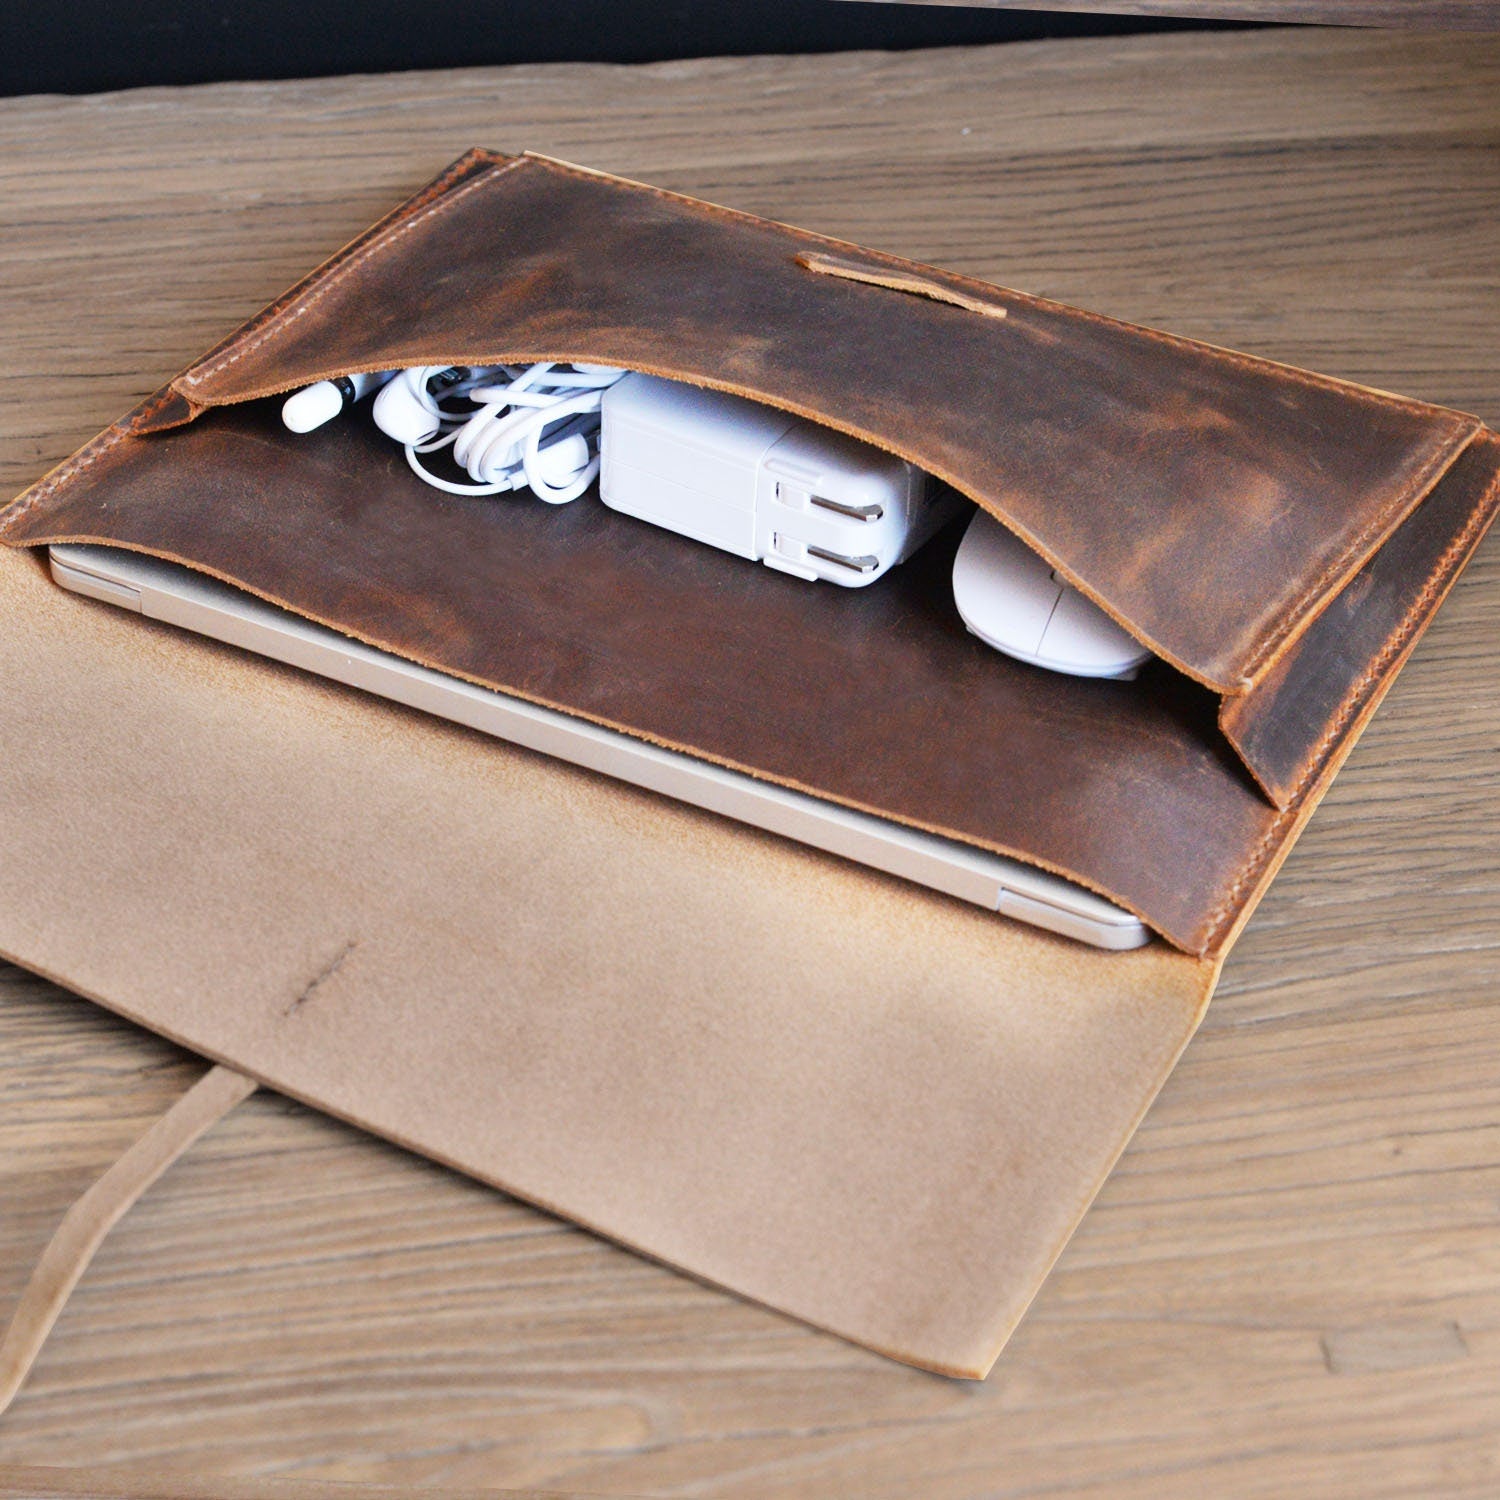 Handmade distressed leather macbook laptop portfolio business